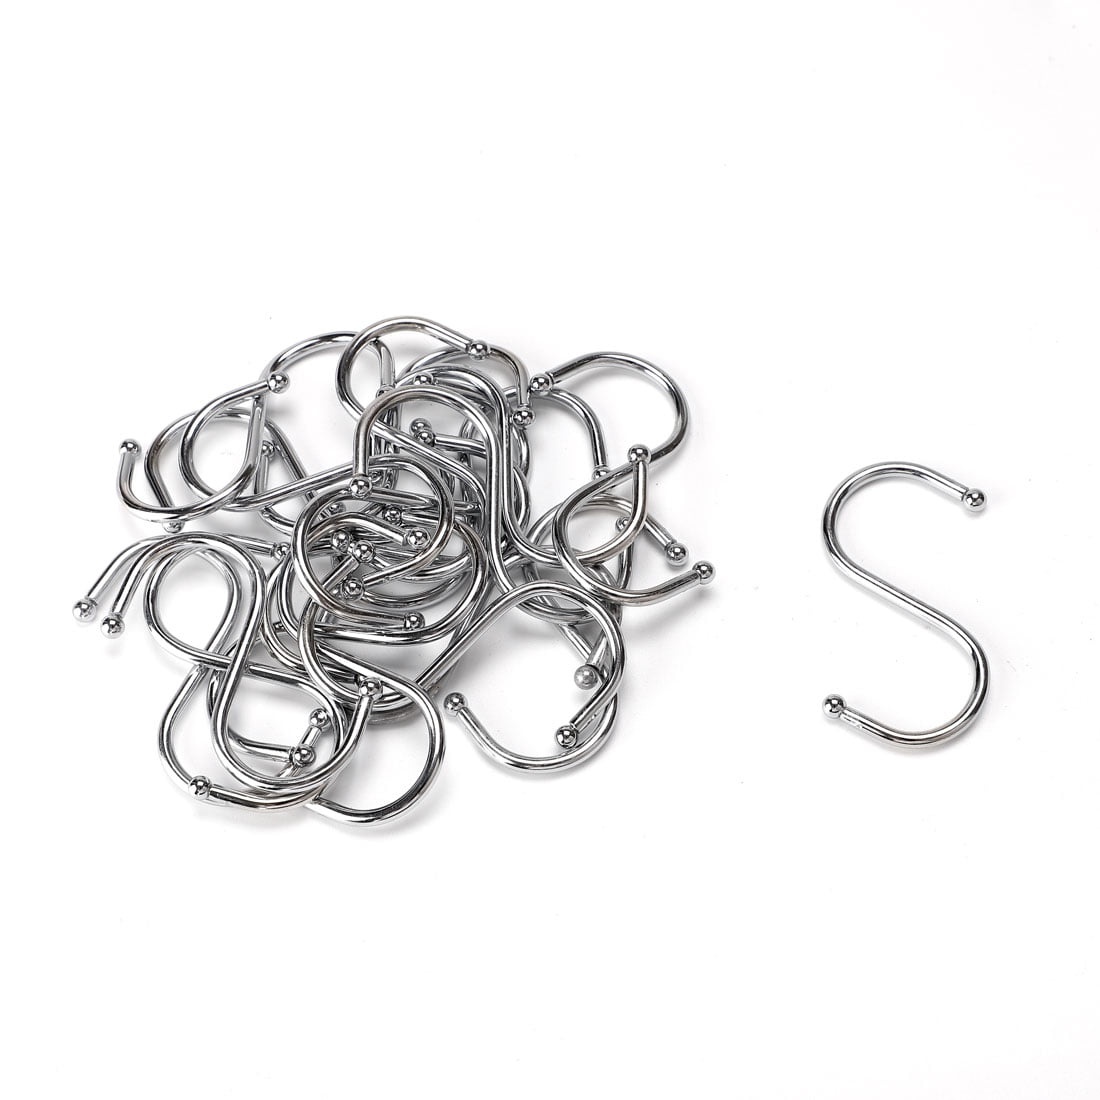 S' Shape Type 1.96" 2.55" 3.14" 4.92" Stainless Steel Utility Hooks Hangers Hook 